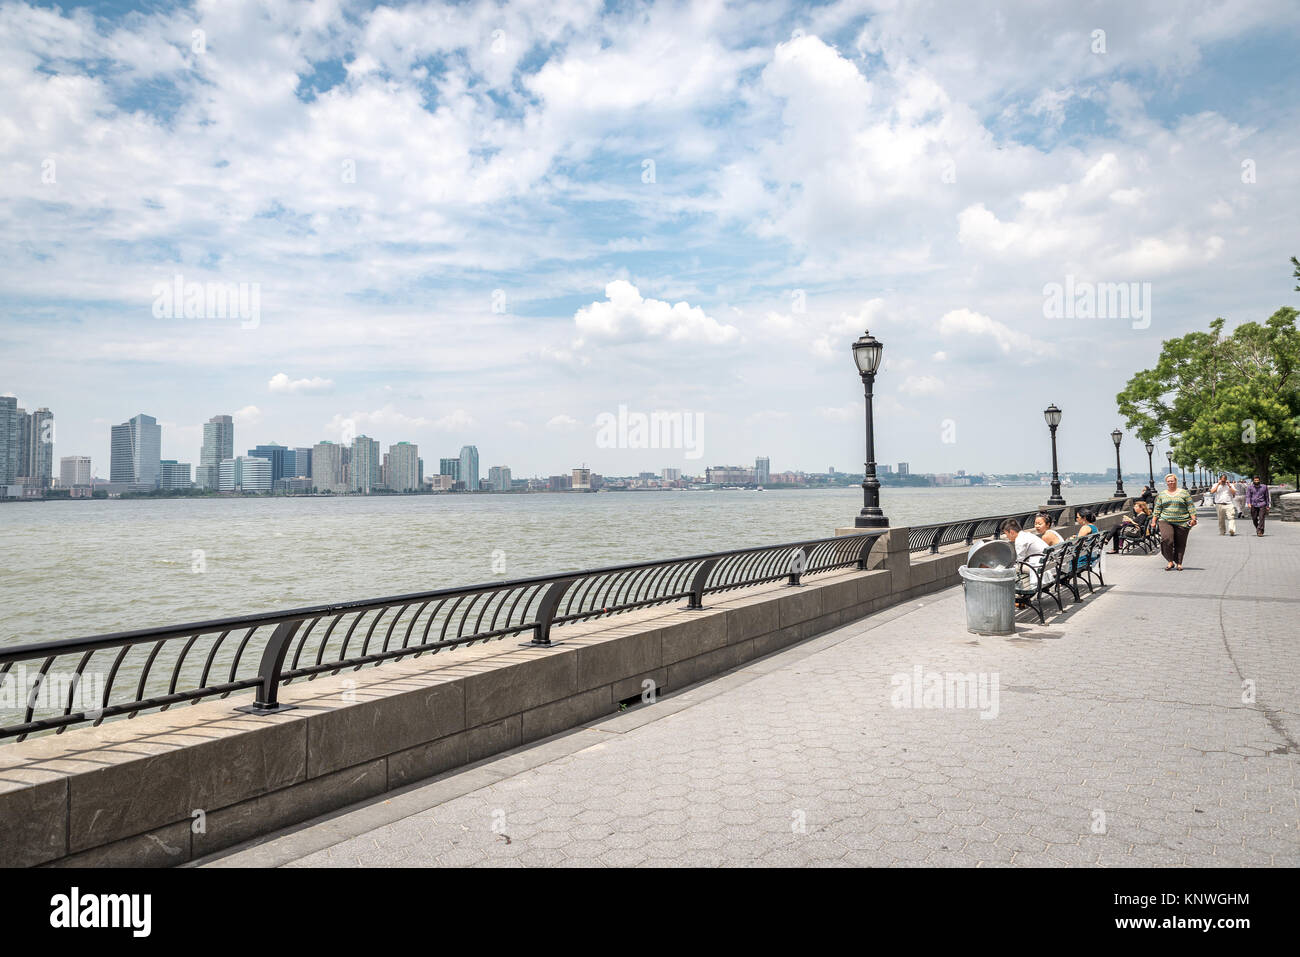 NEW YORK CITY - 13. Juli: Blick auf Jersey City am 13. Juli 2015 in New York. Jersey City ist die bevölkerungsreichste Stadt im US-Bundesstaat New Jerse Stockfoto